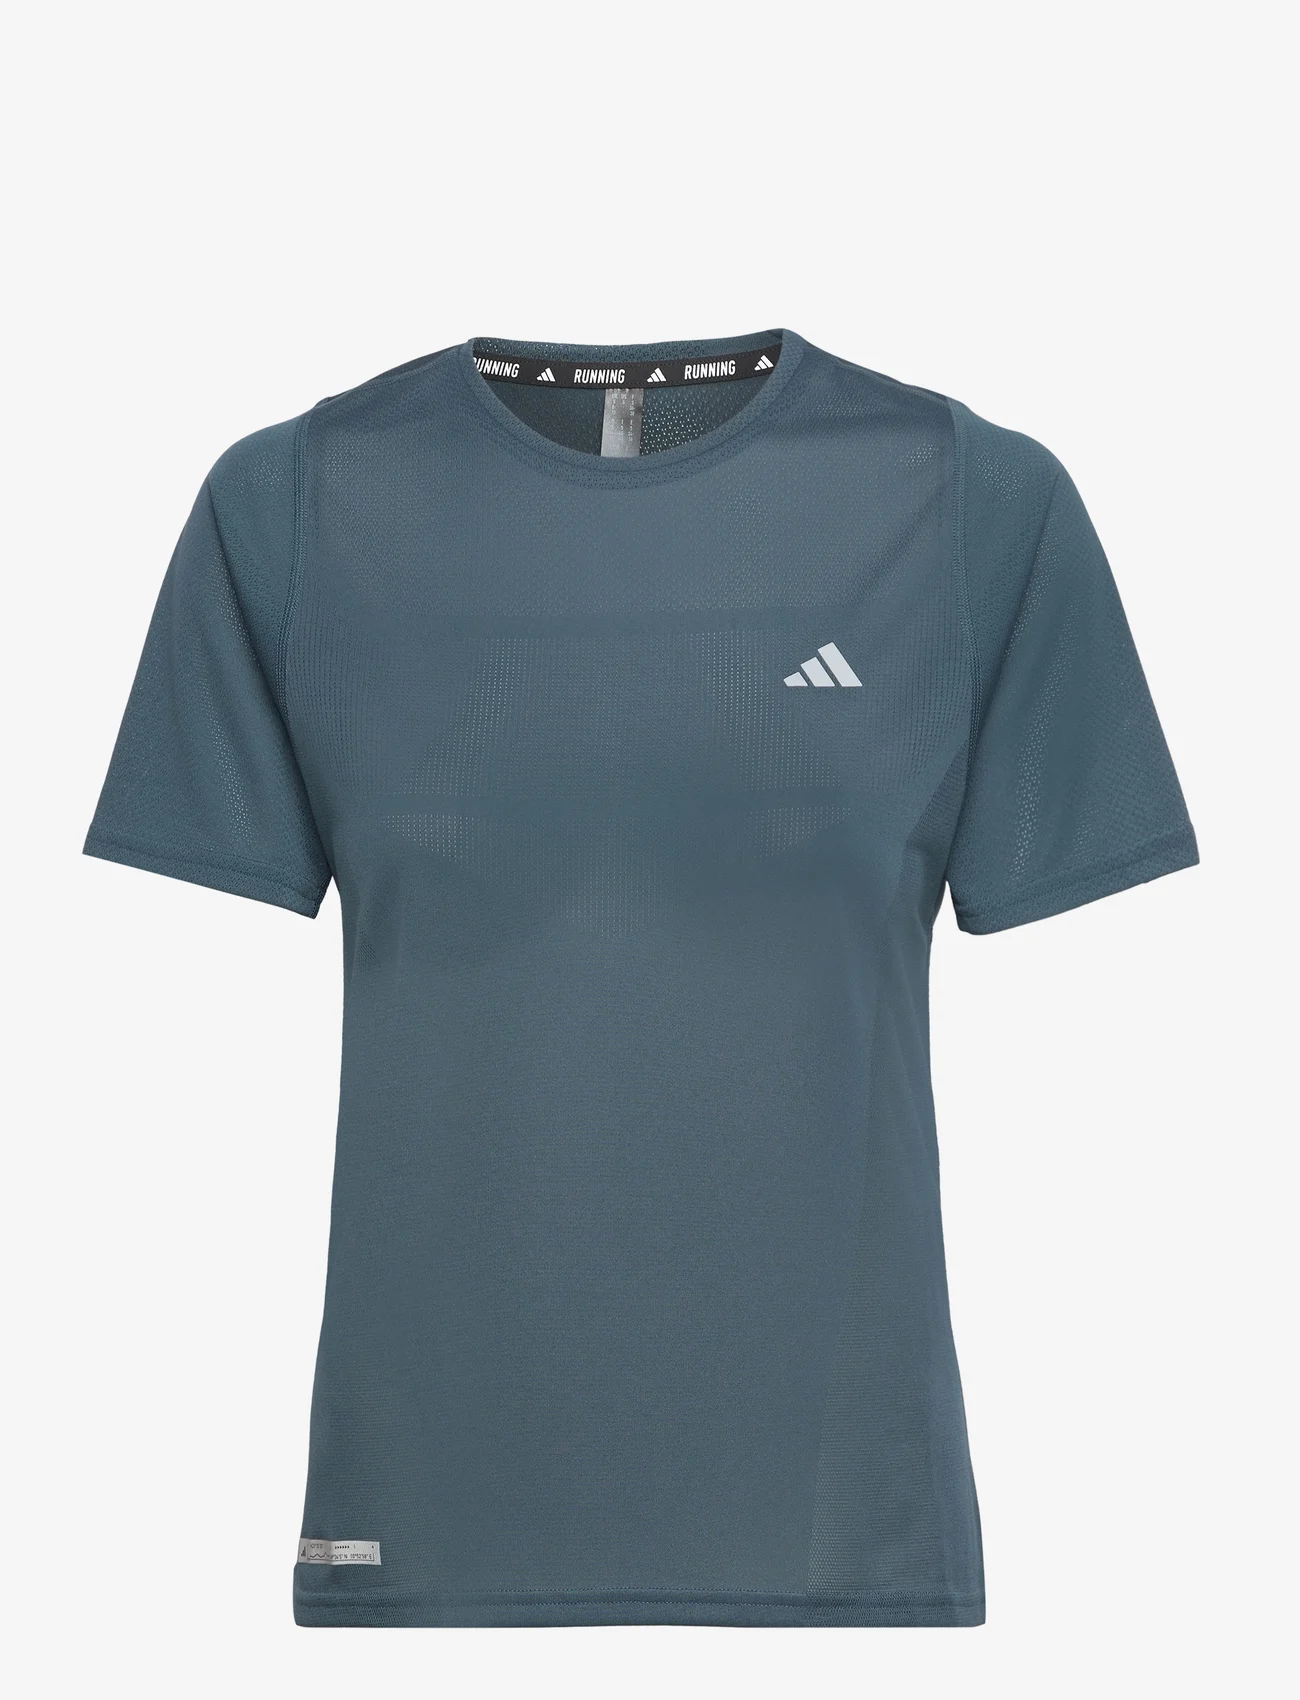 adidas Performance - Ultimate Knit T-Shirt - urheilutopit - arcngt - 0